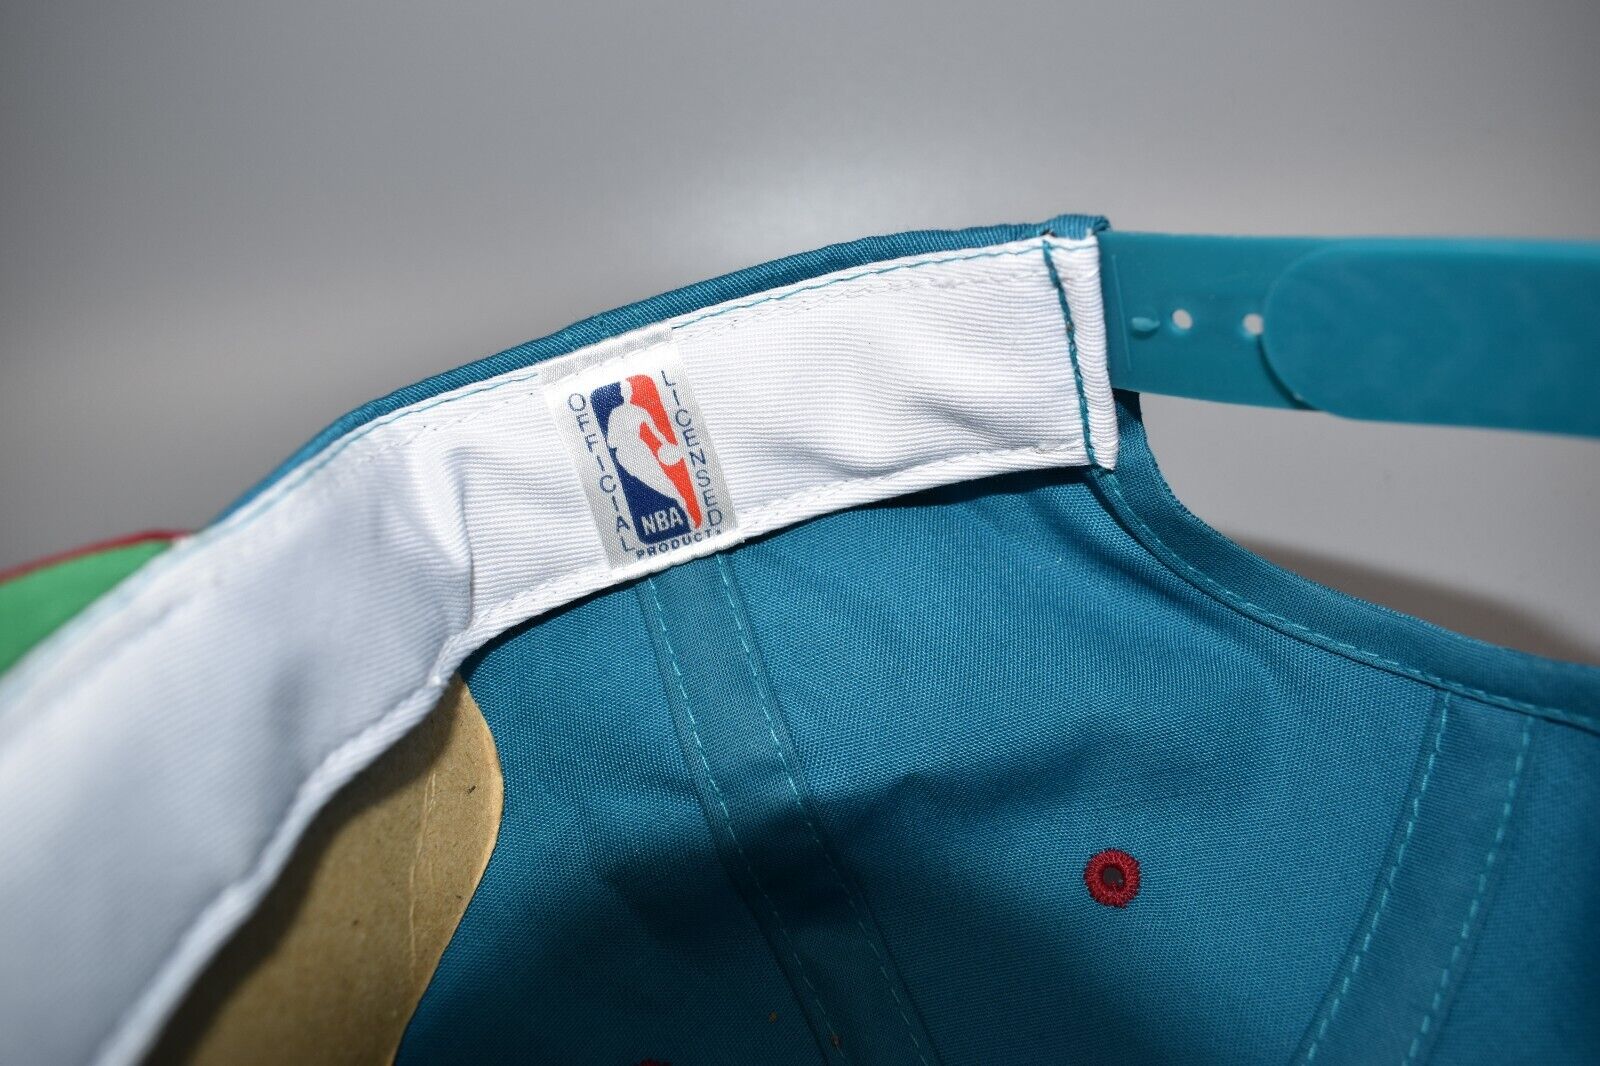 Vintage Detroit Pistons Snapback Hat Sports Specialties